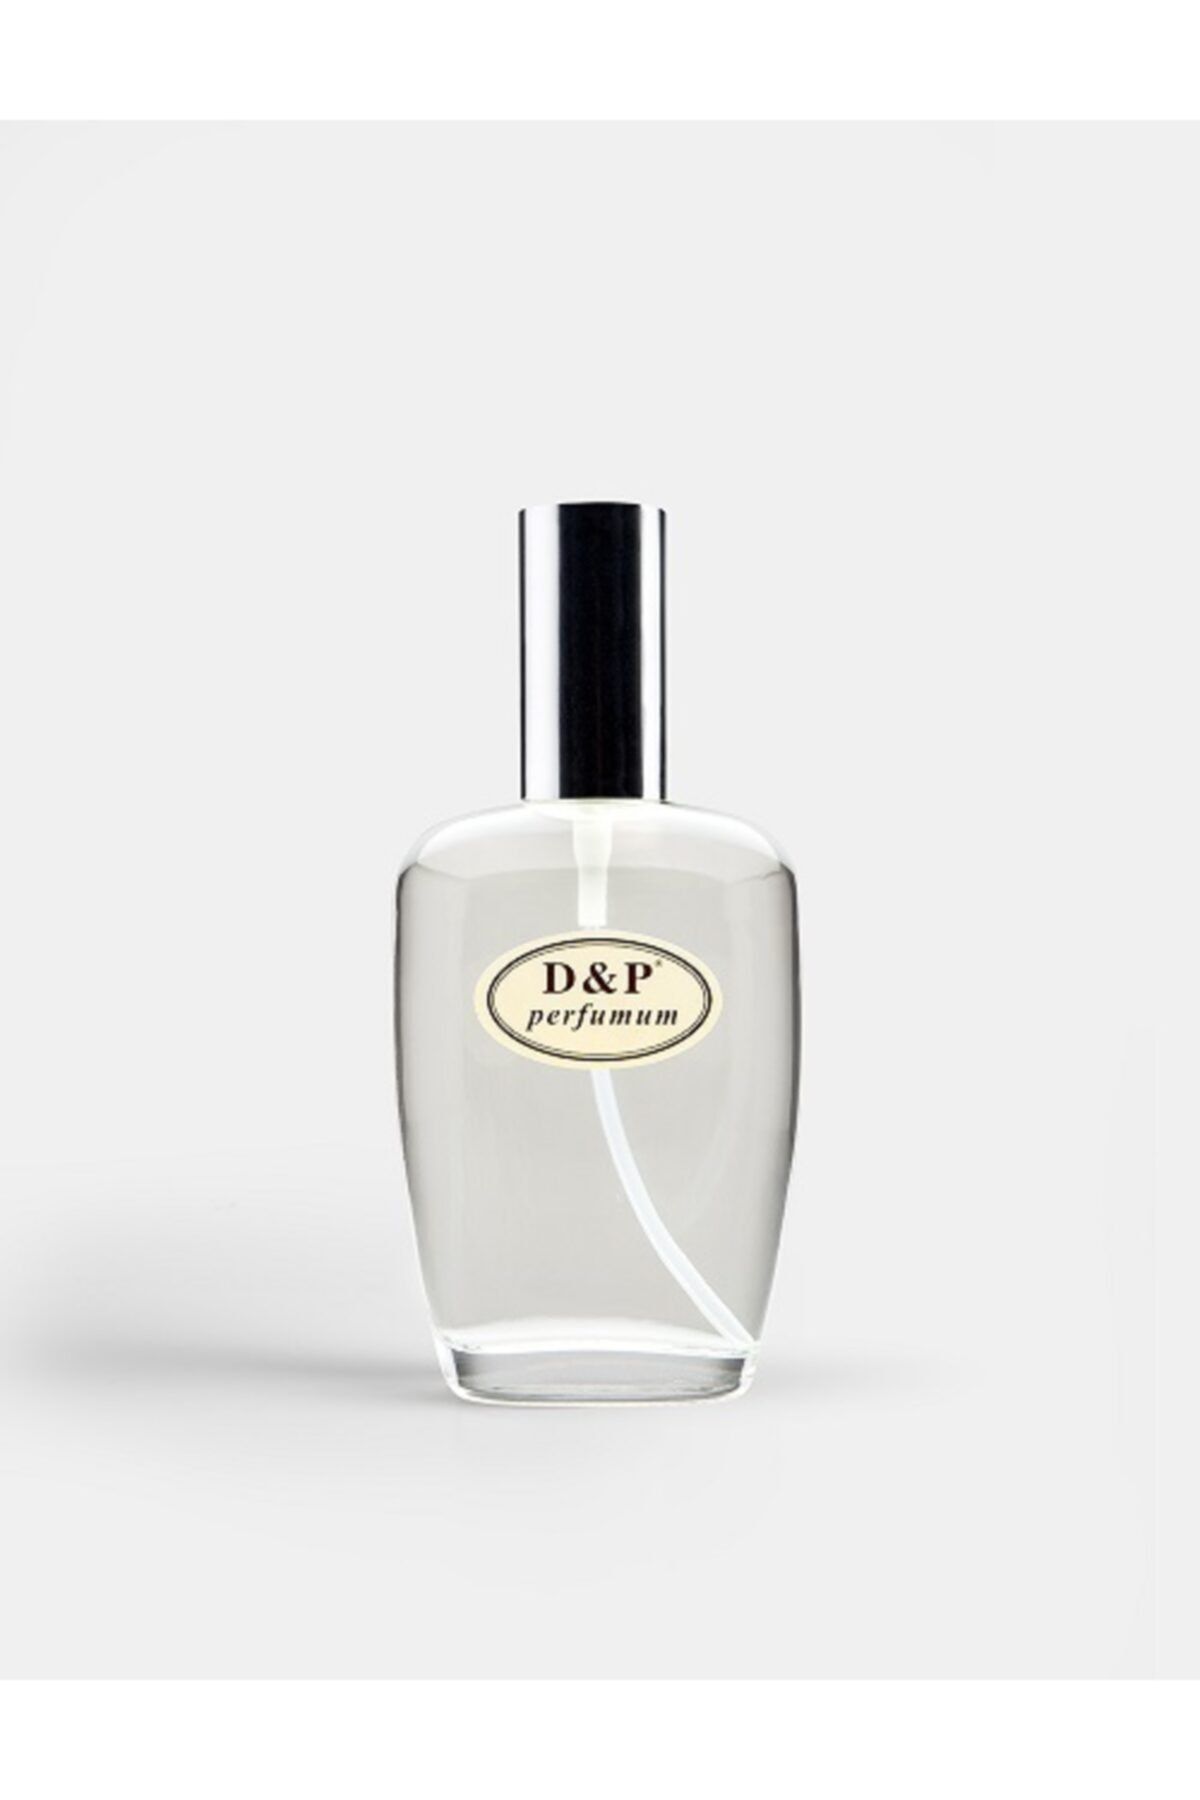 D&P Perfumum E17 Kadın Parfüm 100 ml